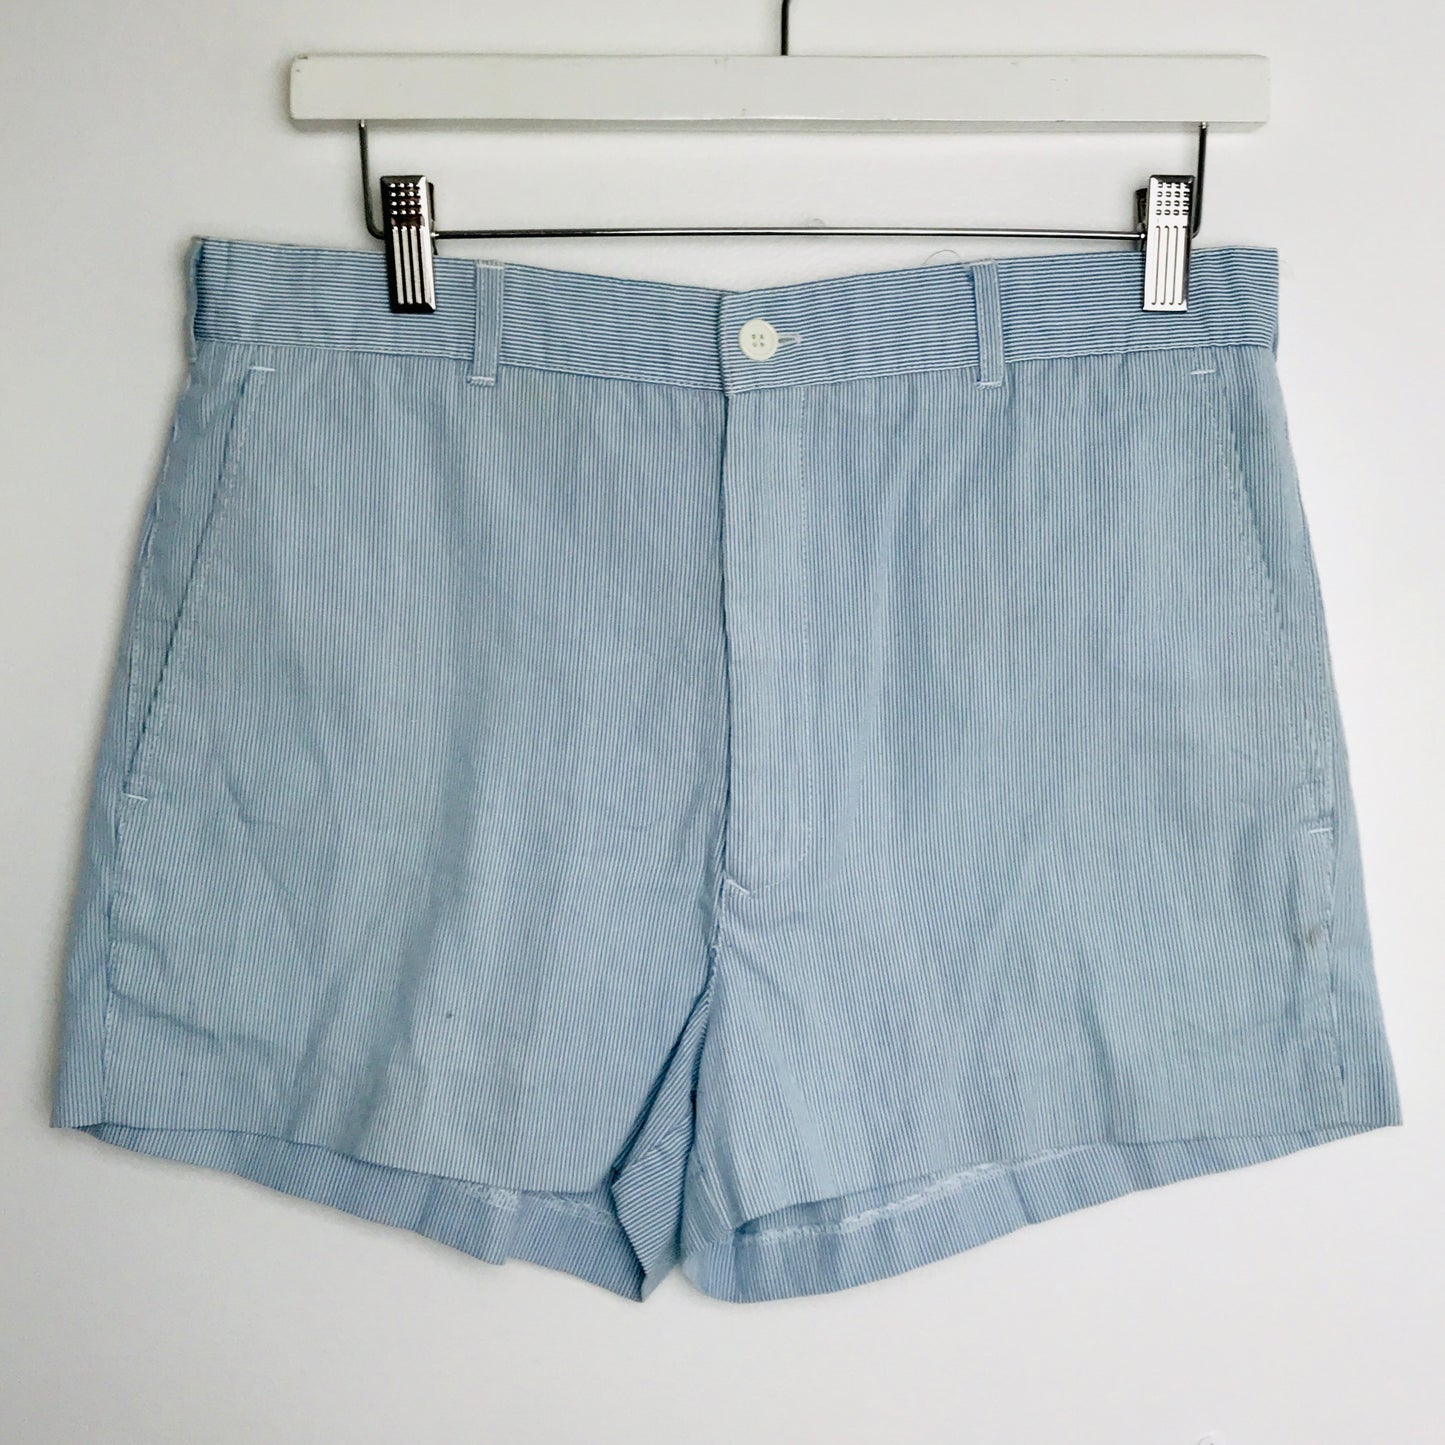 Vintage Givenchy Pinstripe Shorts size 32